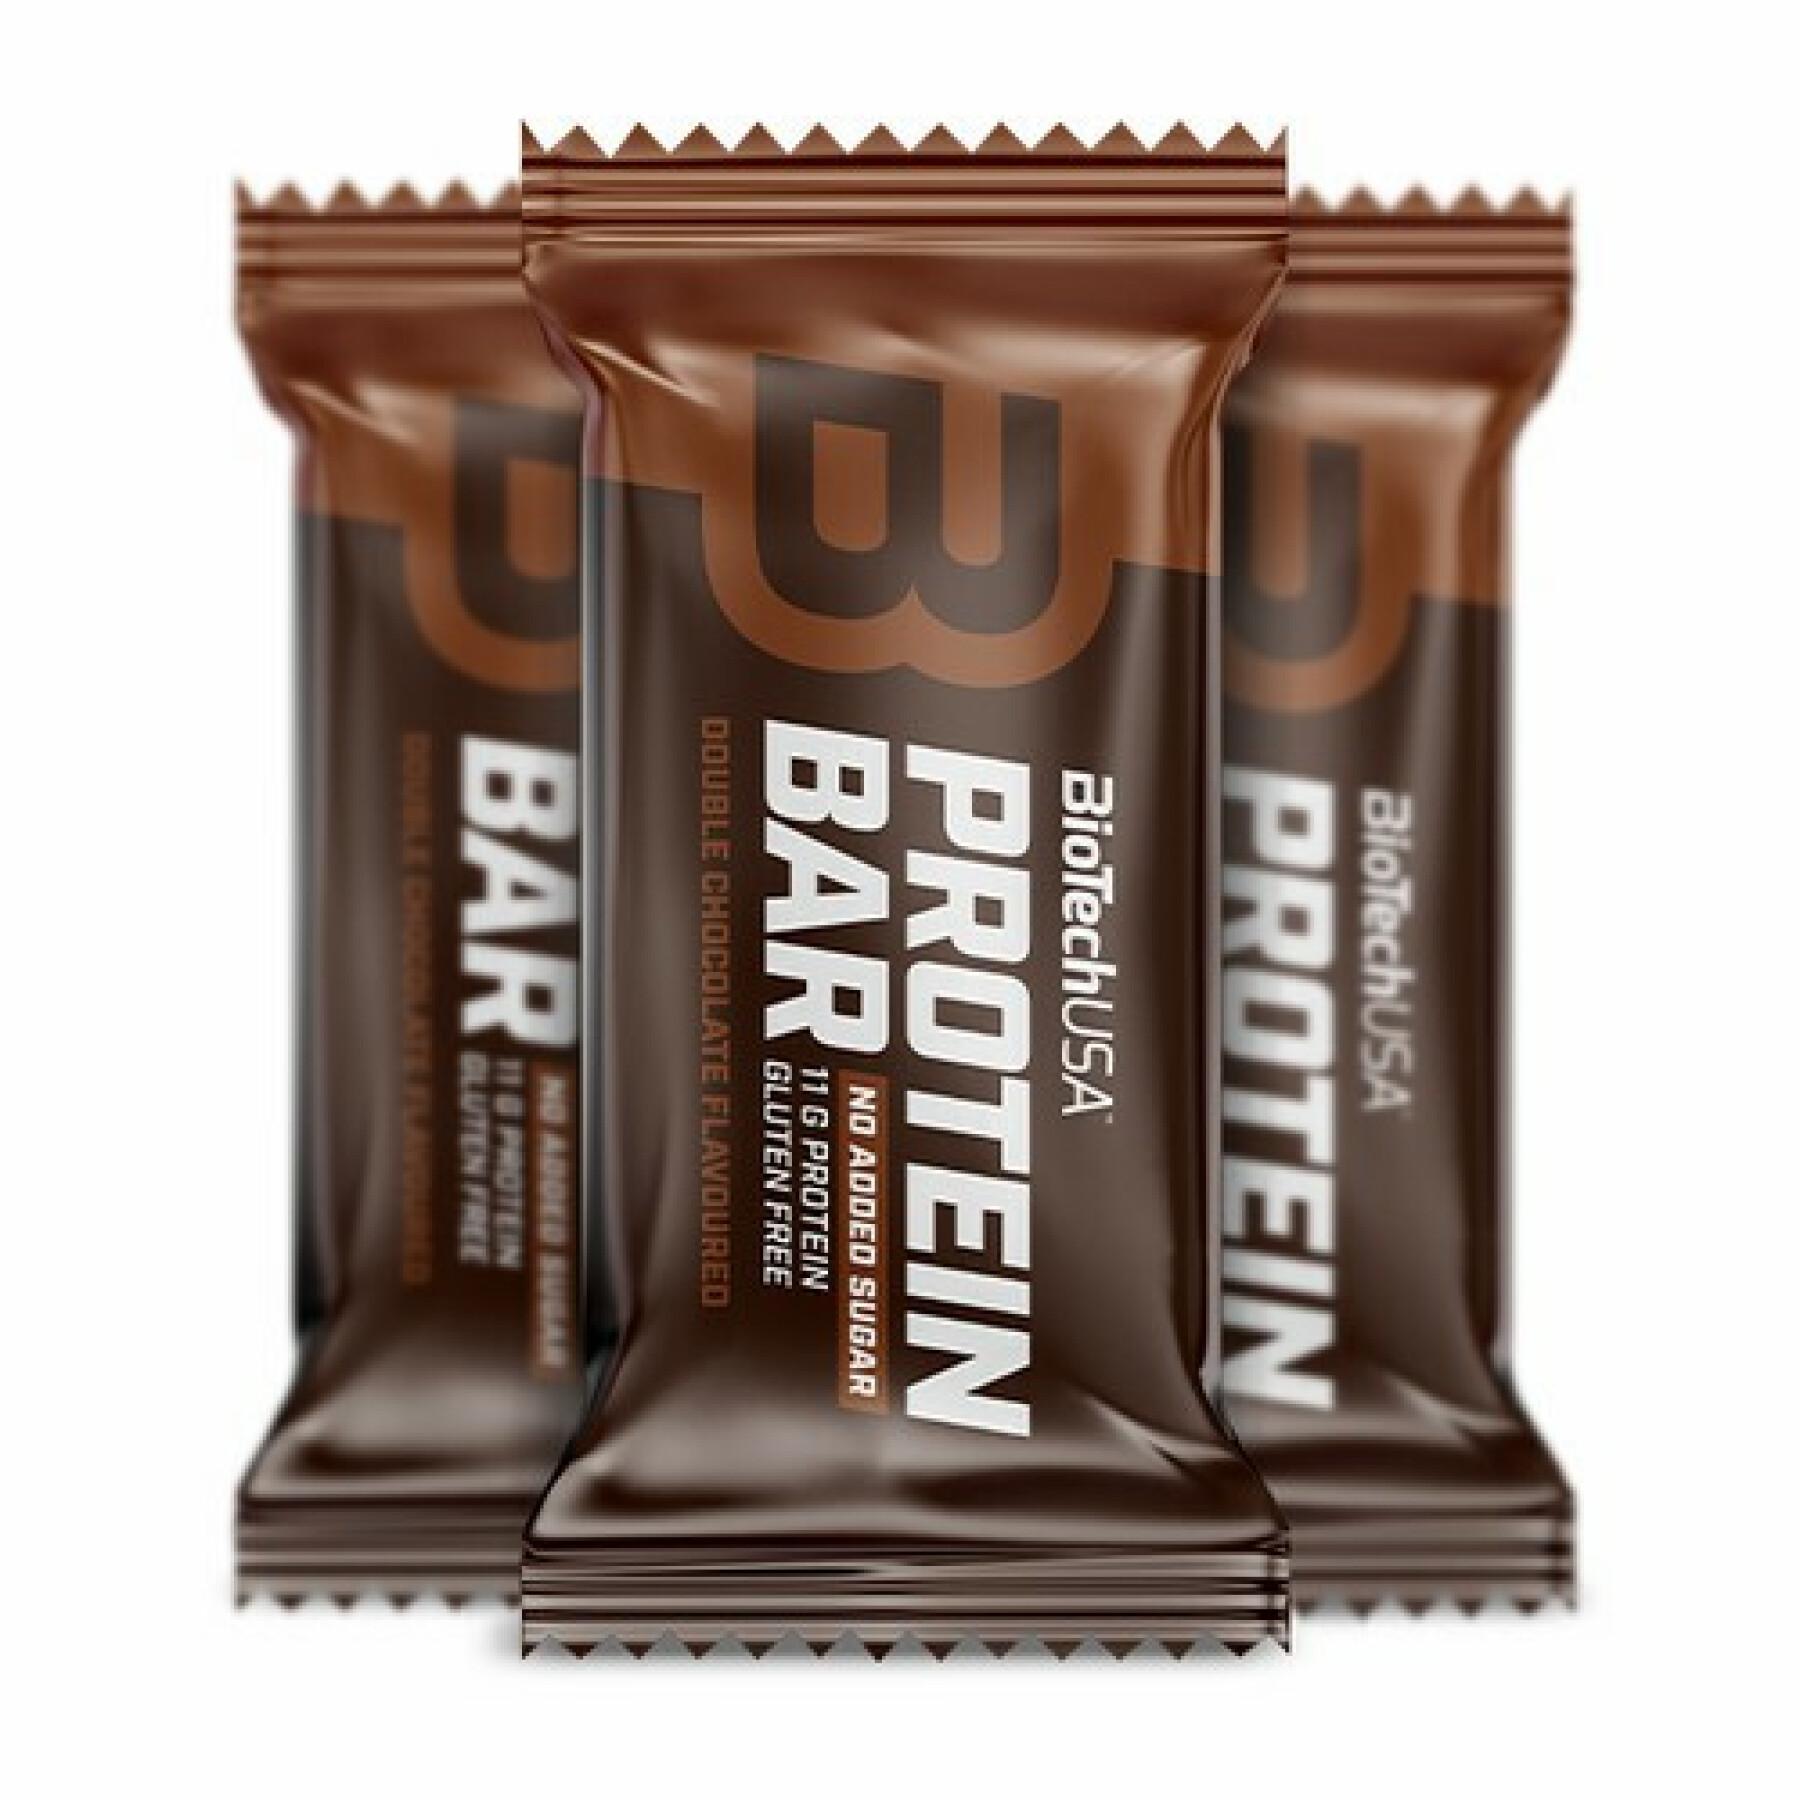 20er Pack Kartons mit Snacks Proteinriegel Biotech USA - Double chocolat